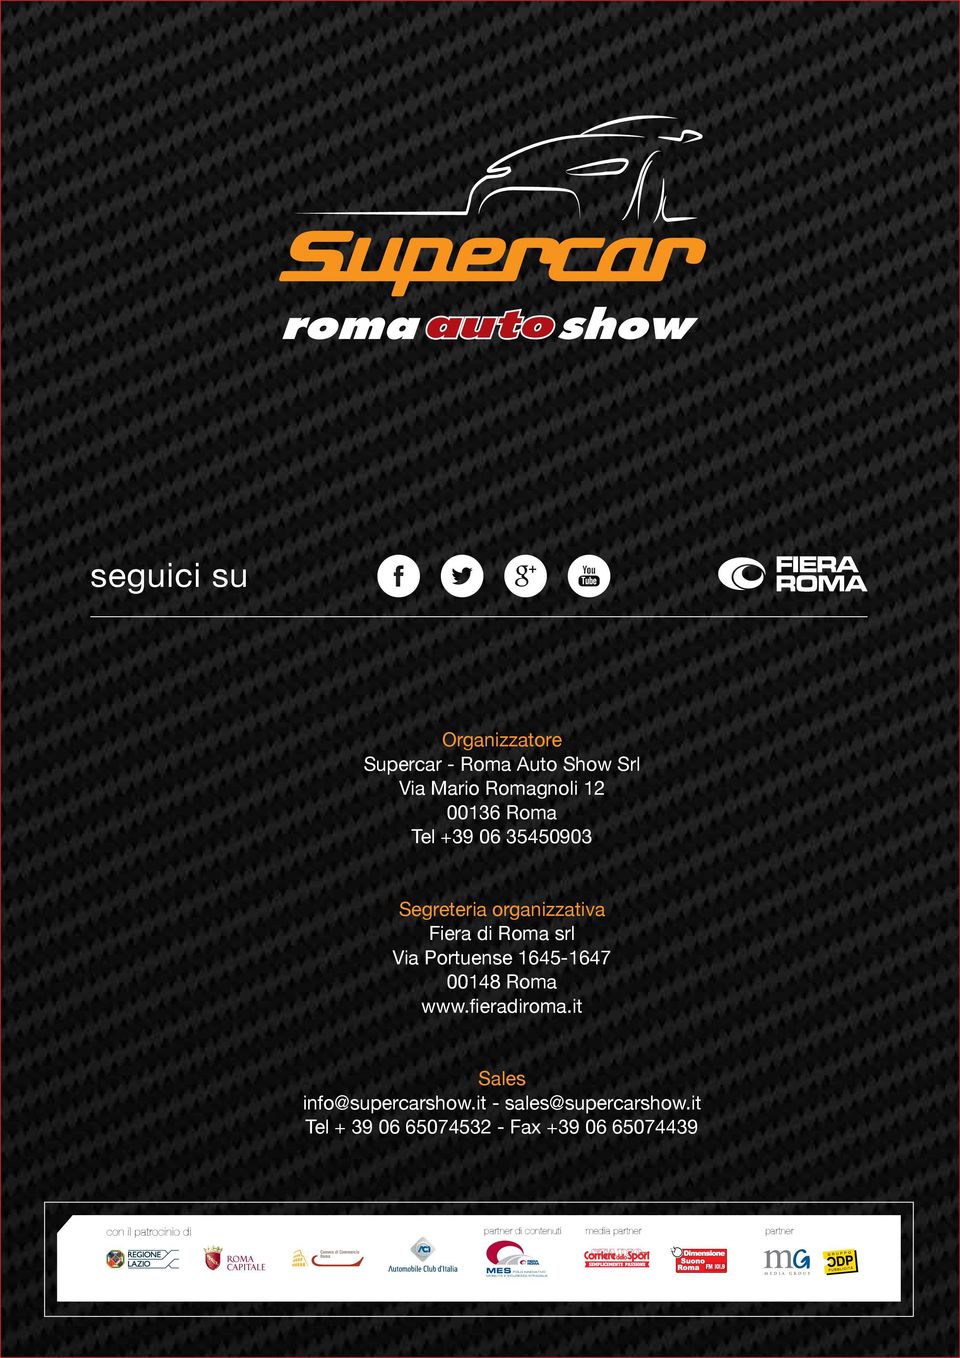 Portuense 1645-1647 00148 Roma www.fieradiroma.it Sales info@supercarshow.it - sales@supercarshow.